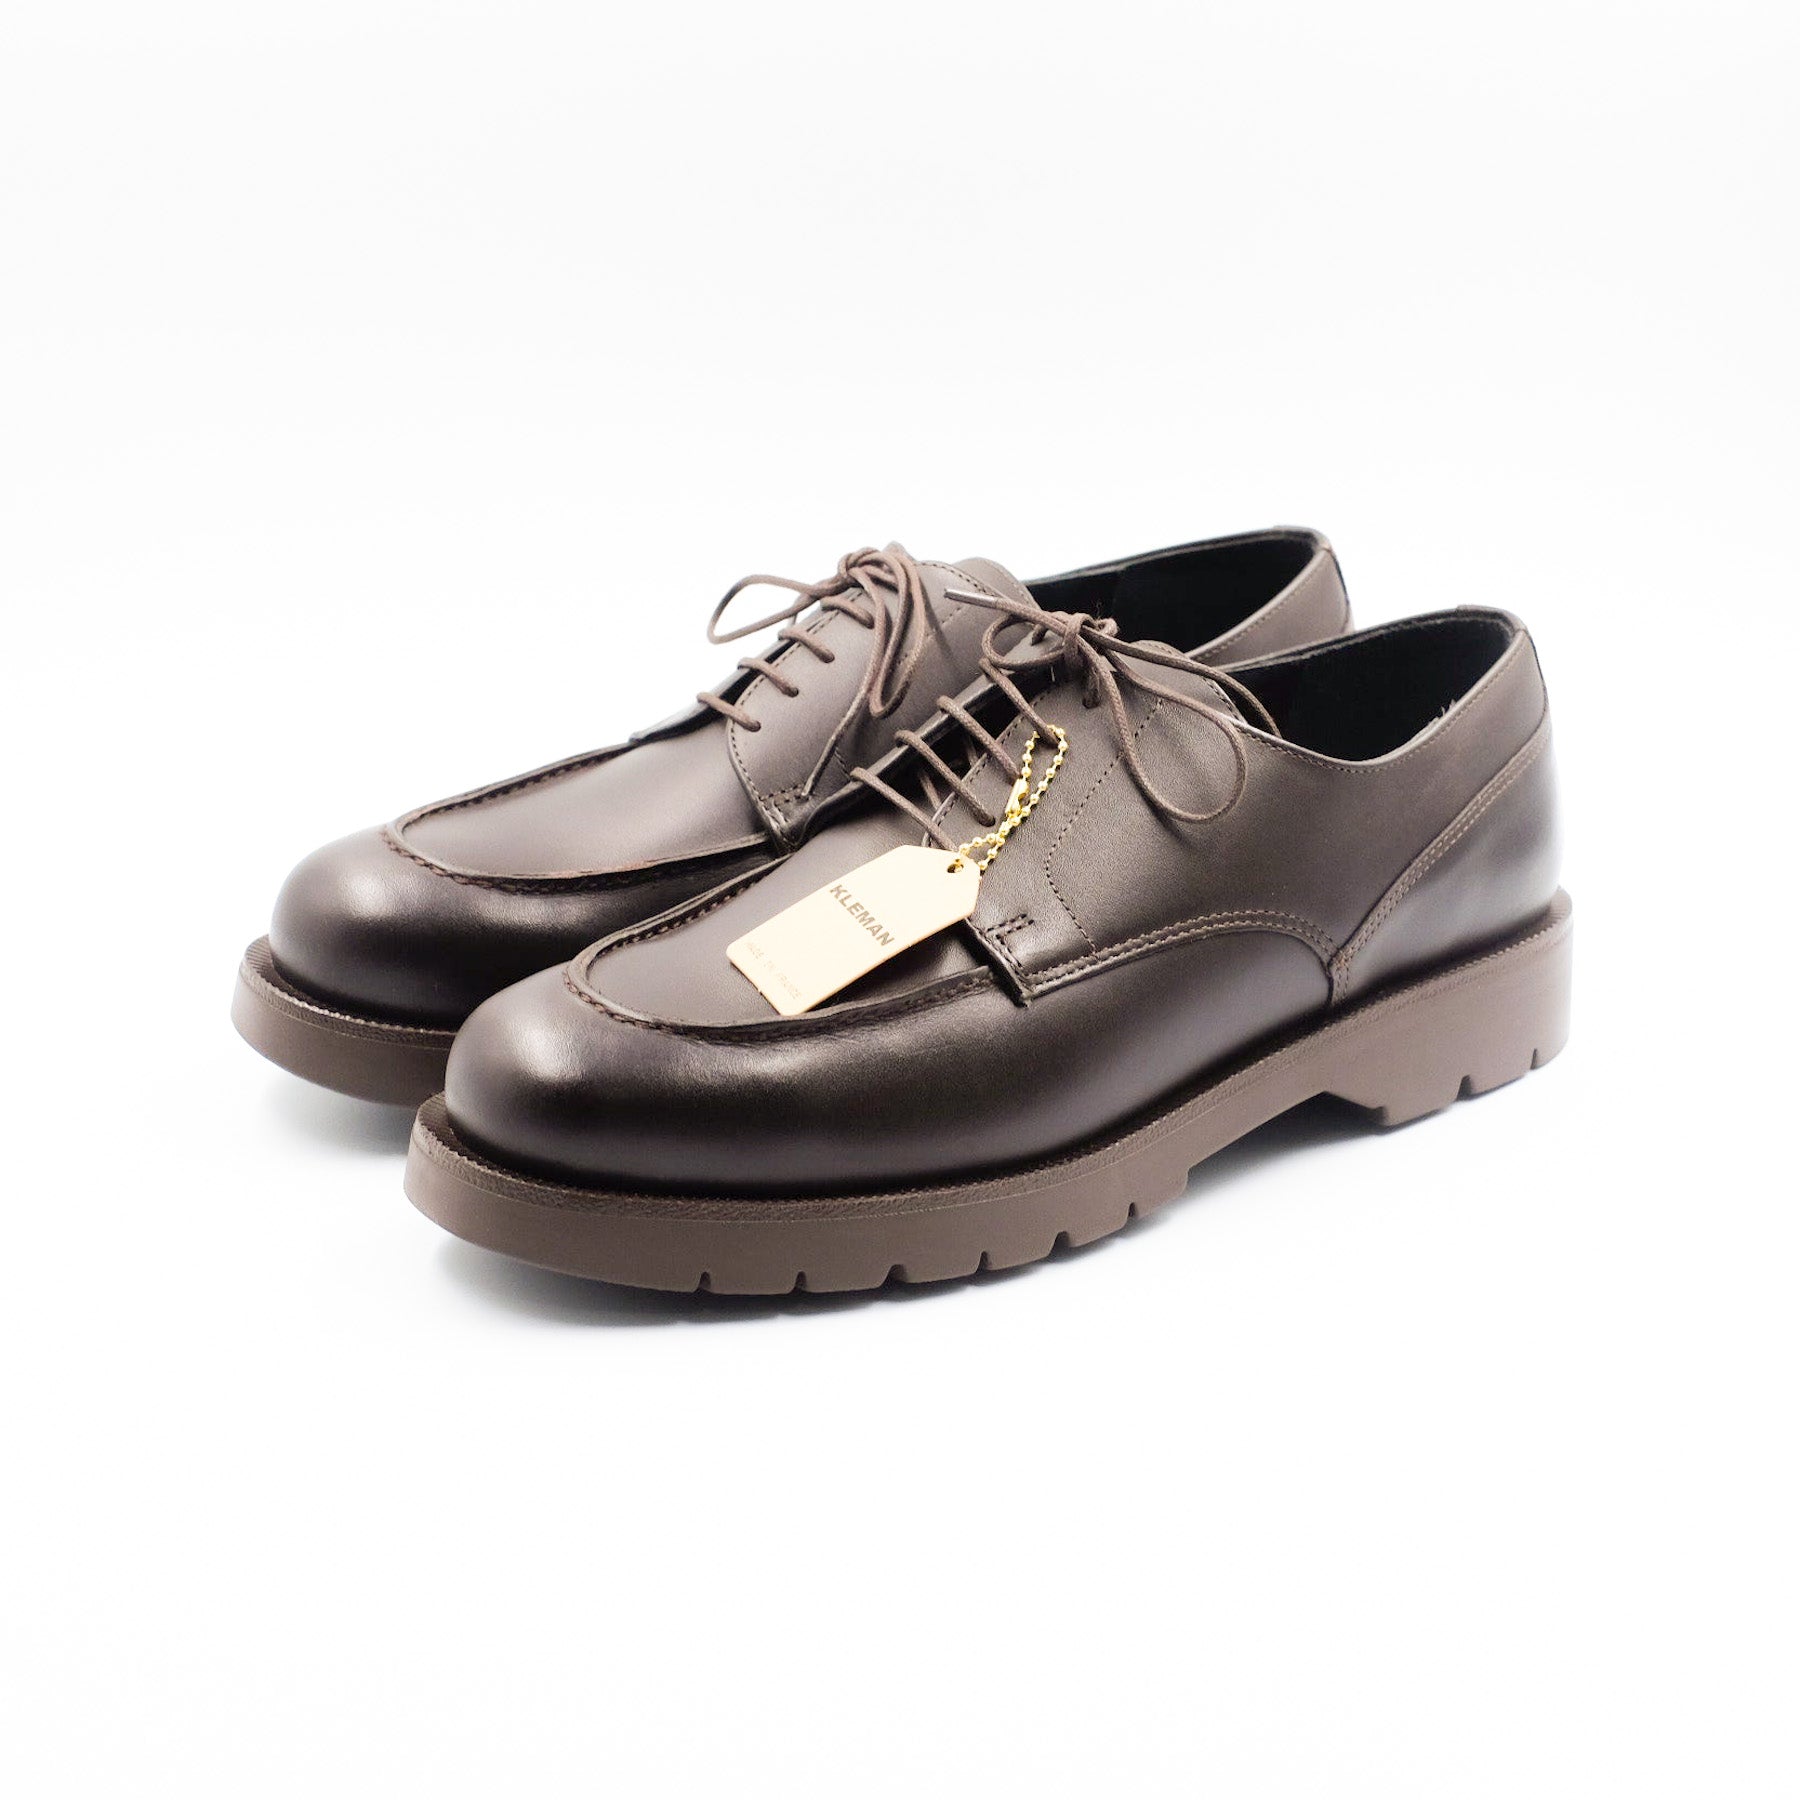 Kleman 'Frodan' Leather Shoes   Marron Brown